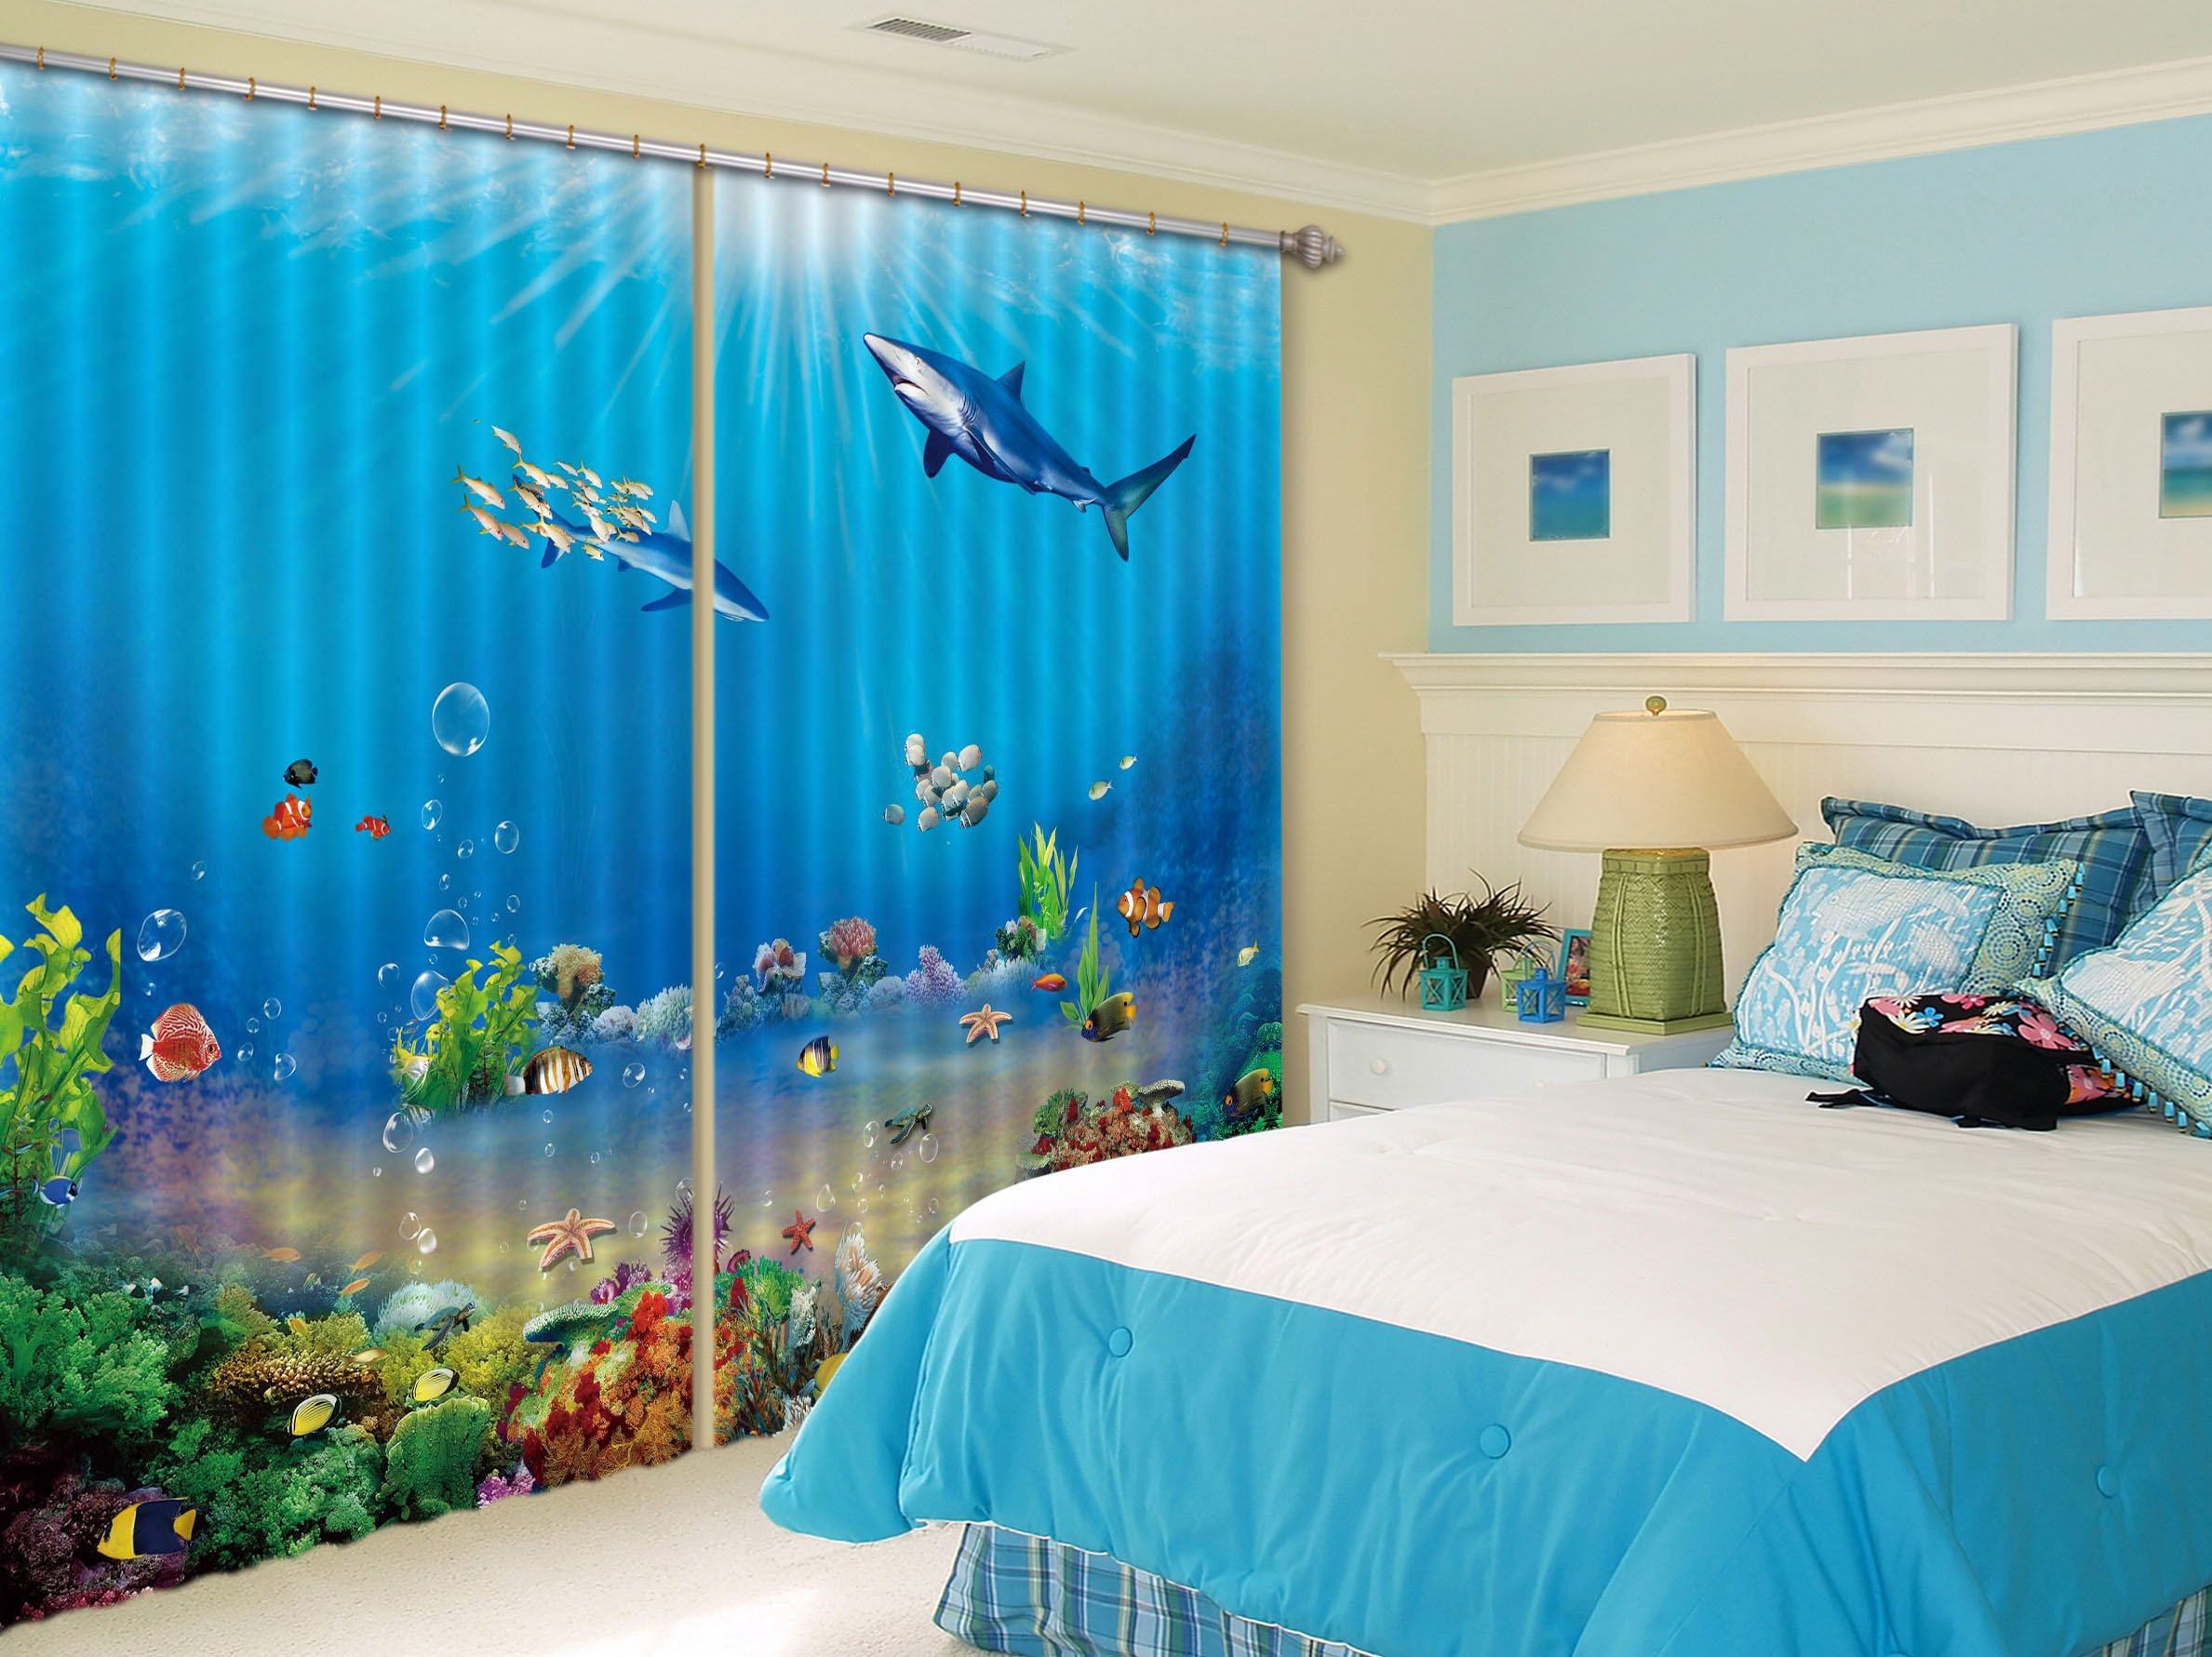 3D Ocean World 201 Curtains Drapes Wallpaper AJ Wallpaper 